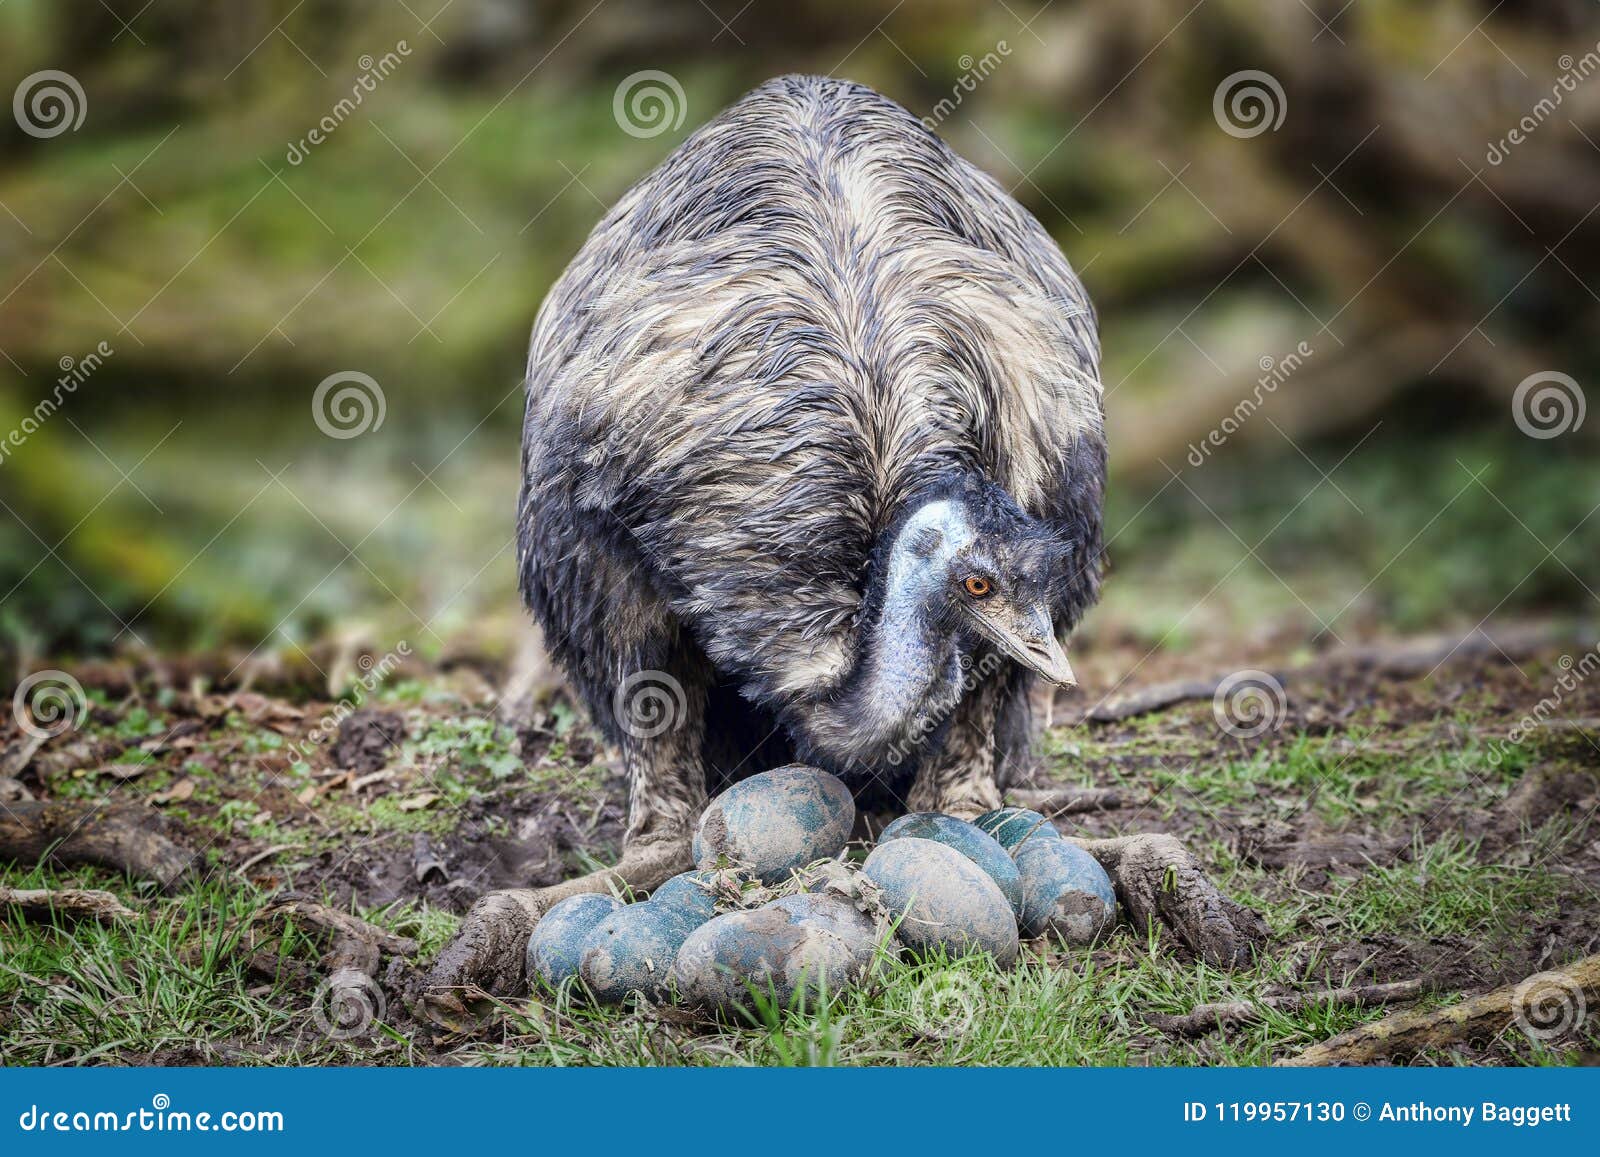 emu bird with her eggs